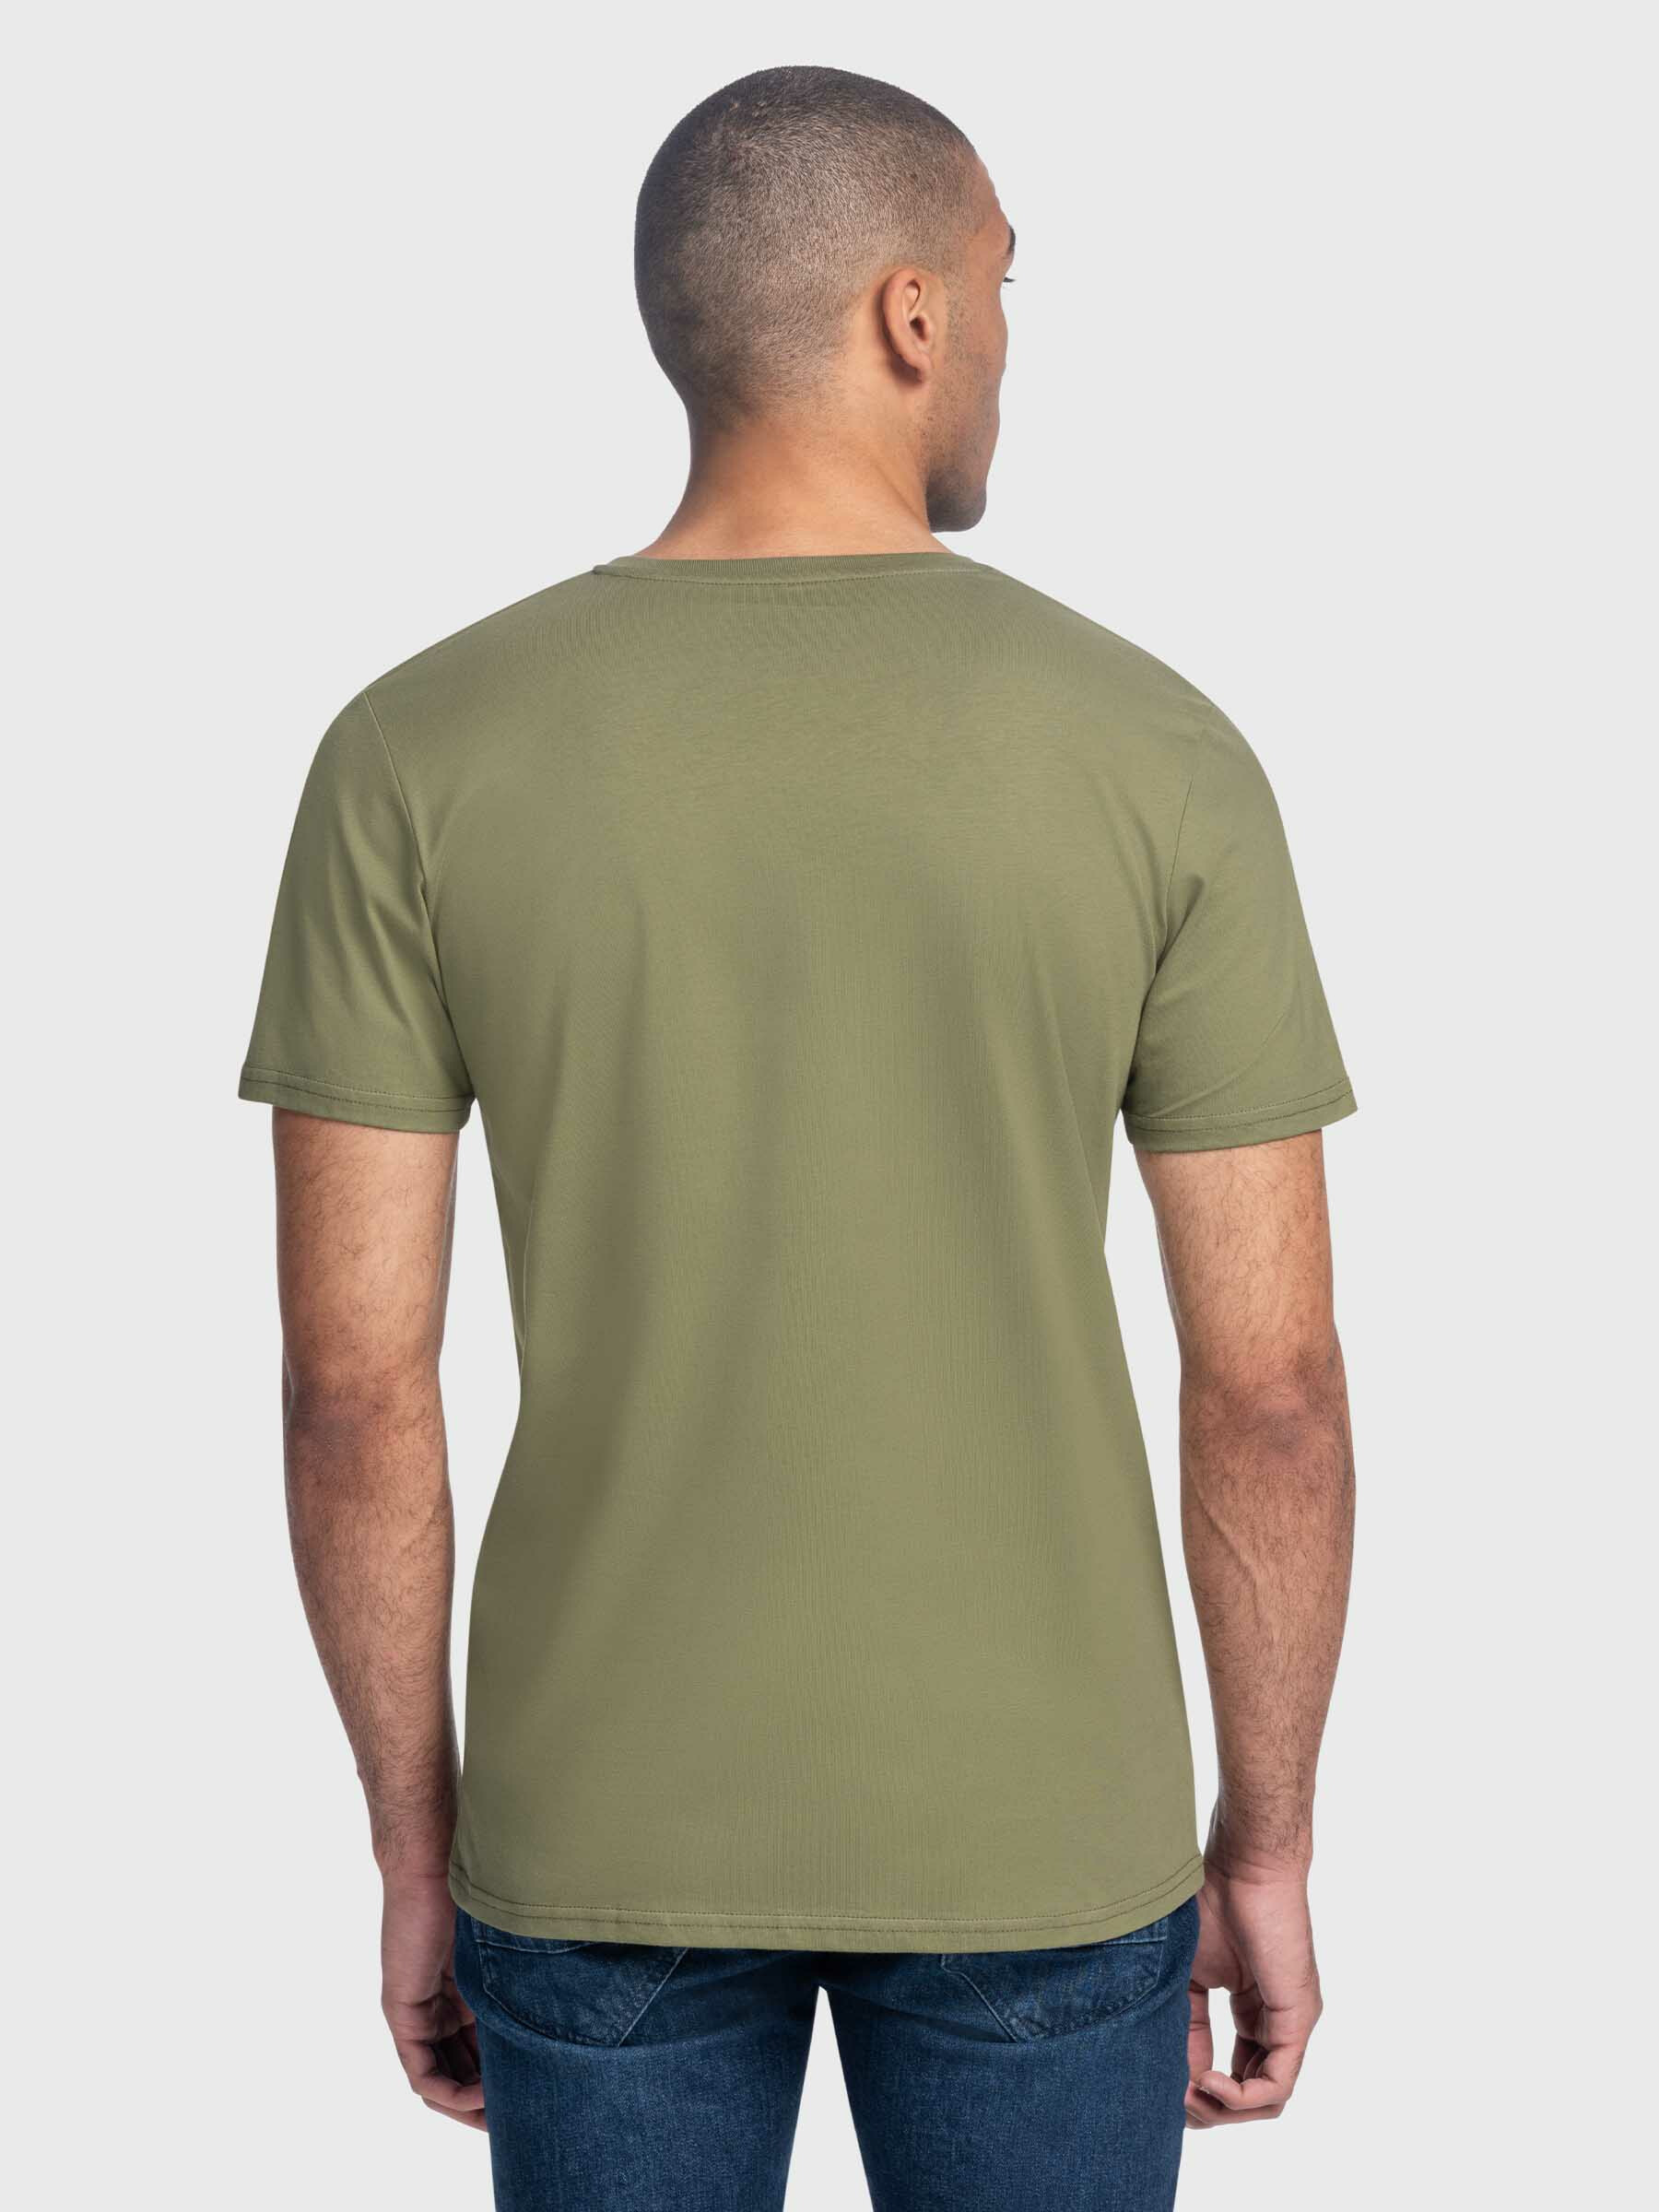 Onschuld Ass Expliciet New York T-shirt Olijfgroen V-hals kopen? Extra lang - Girav